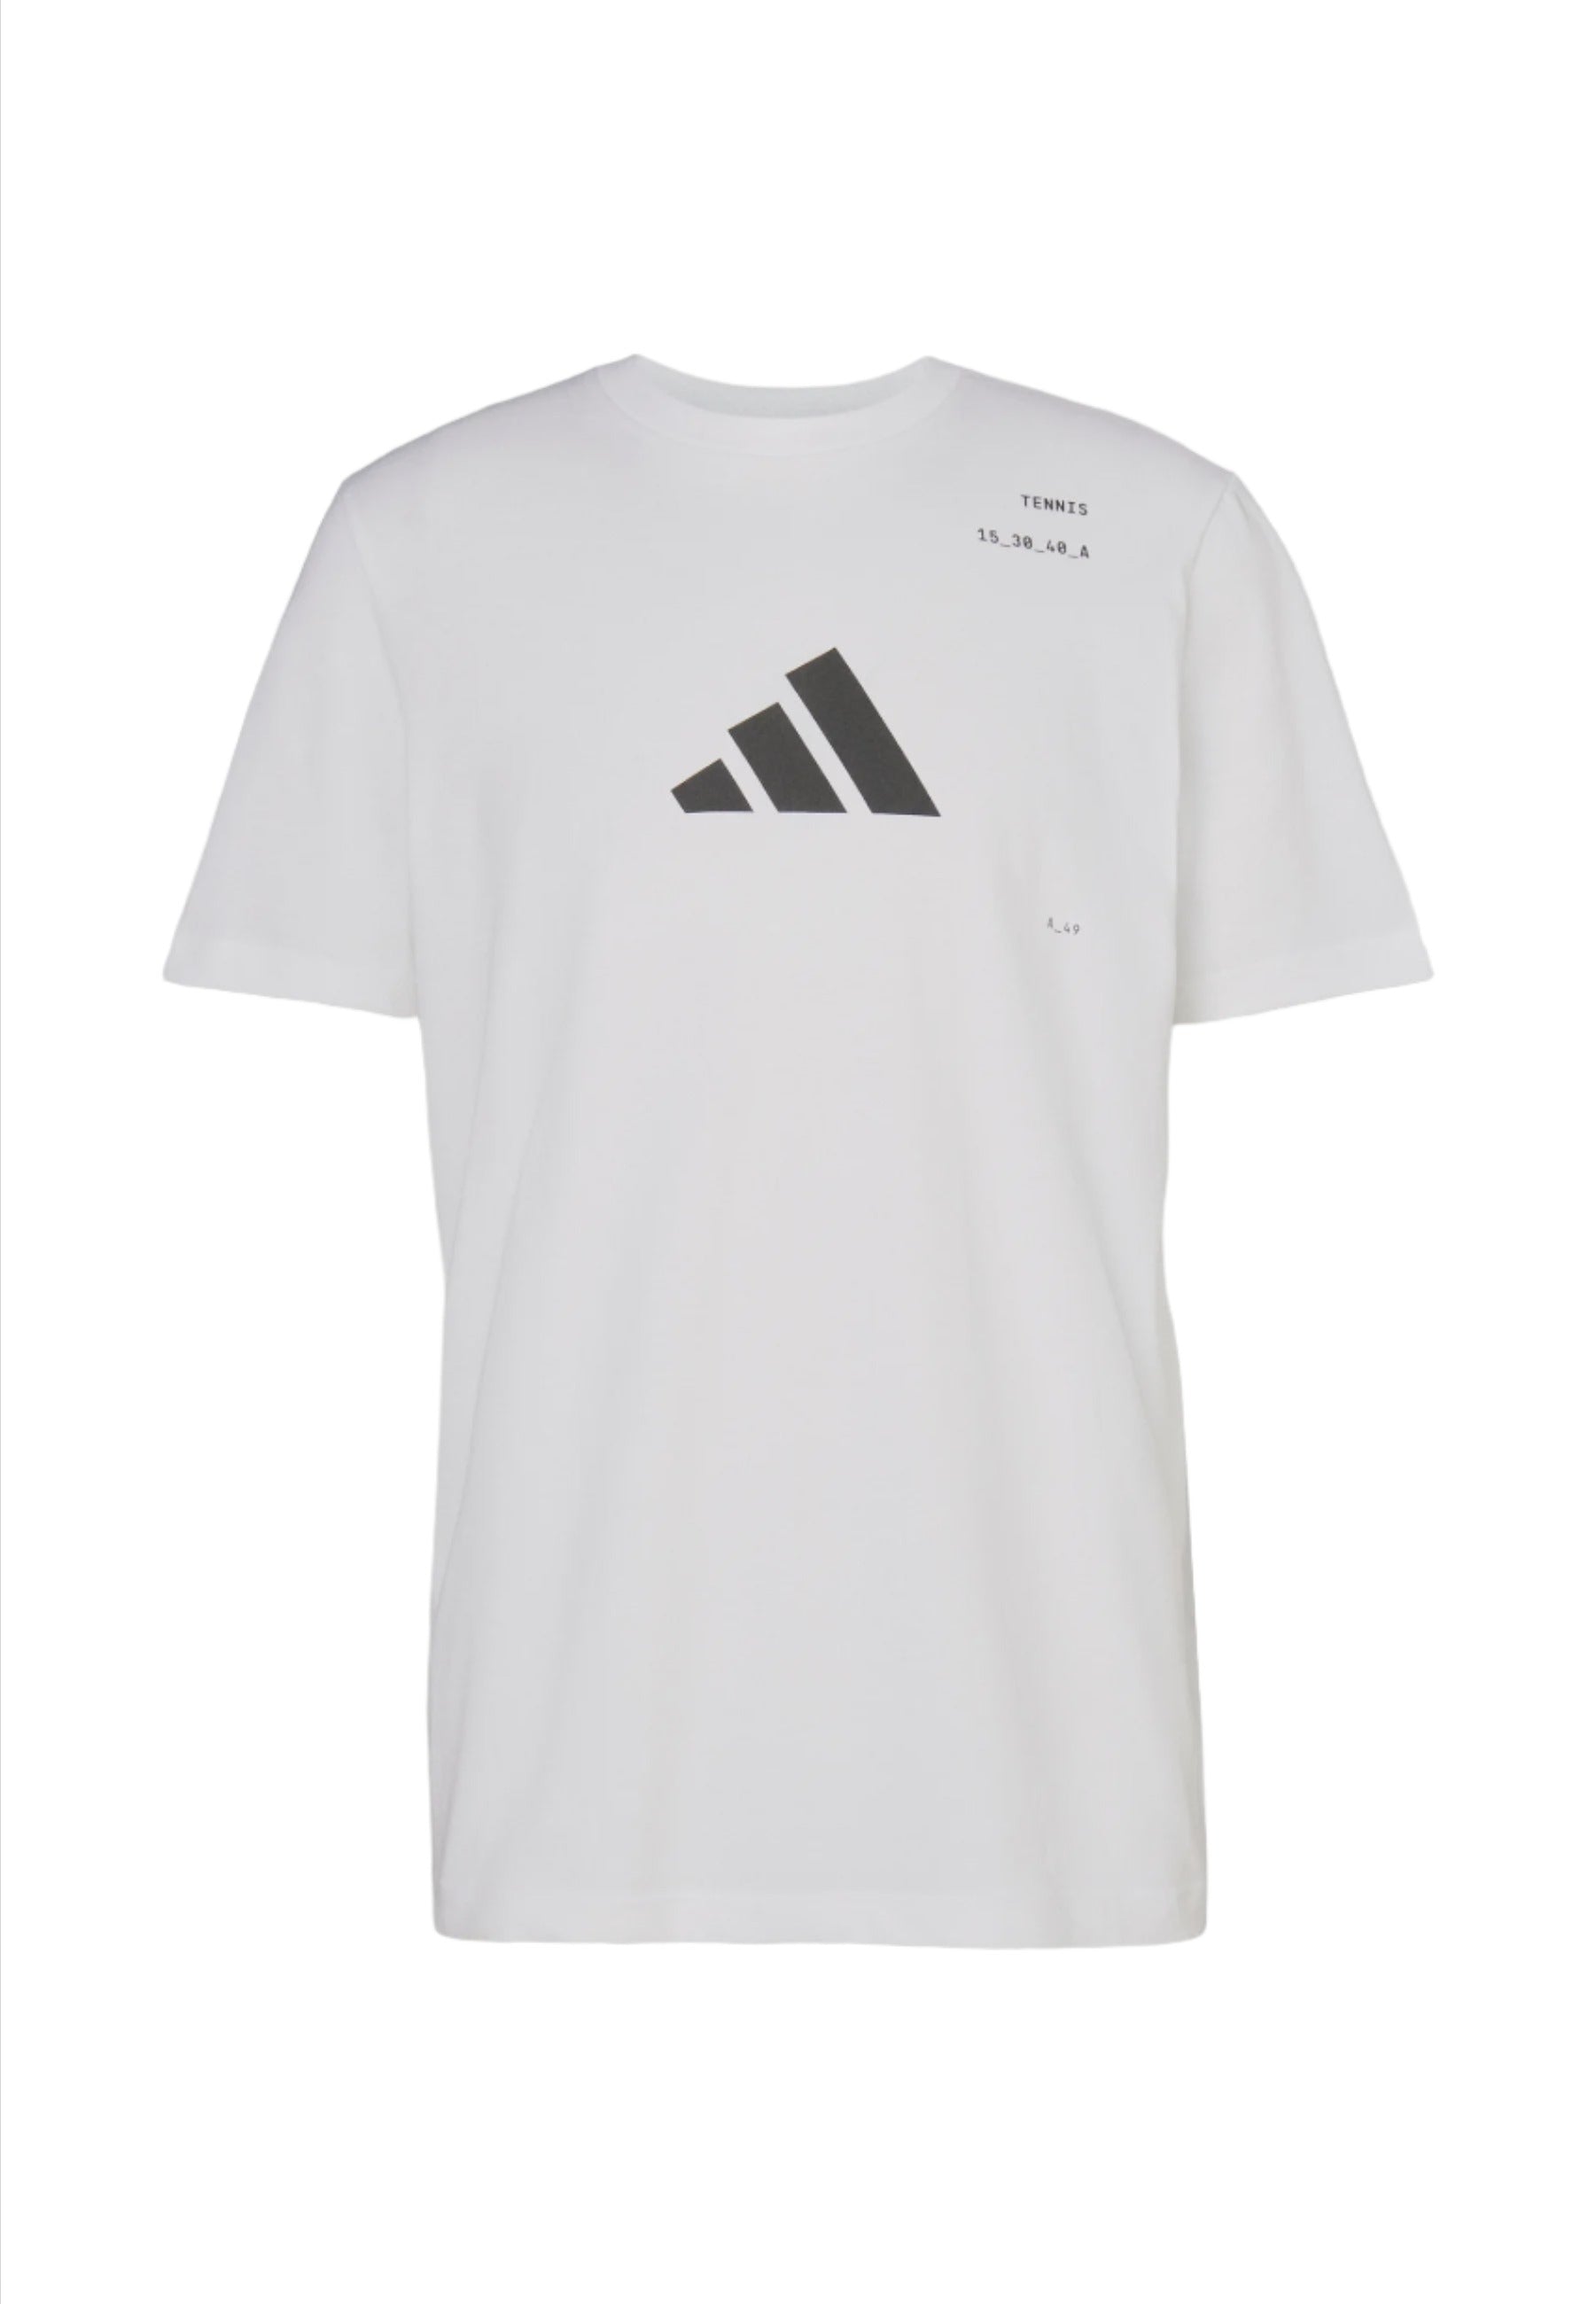 Adidas Tennis Category Men's T-Shirt - White